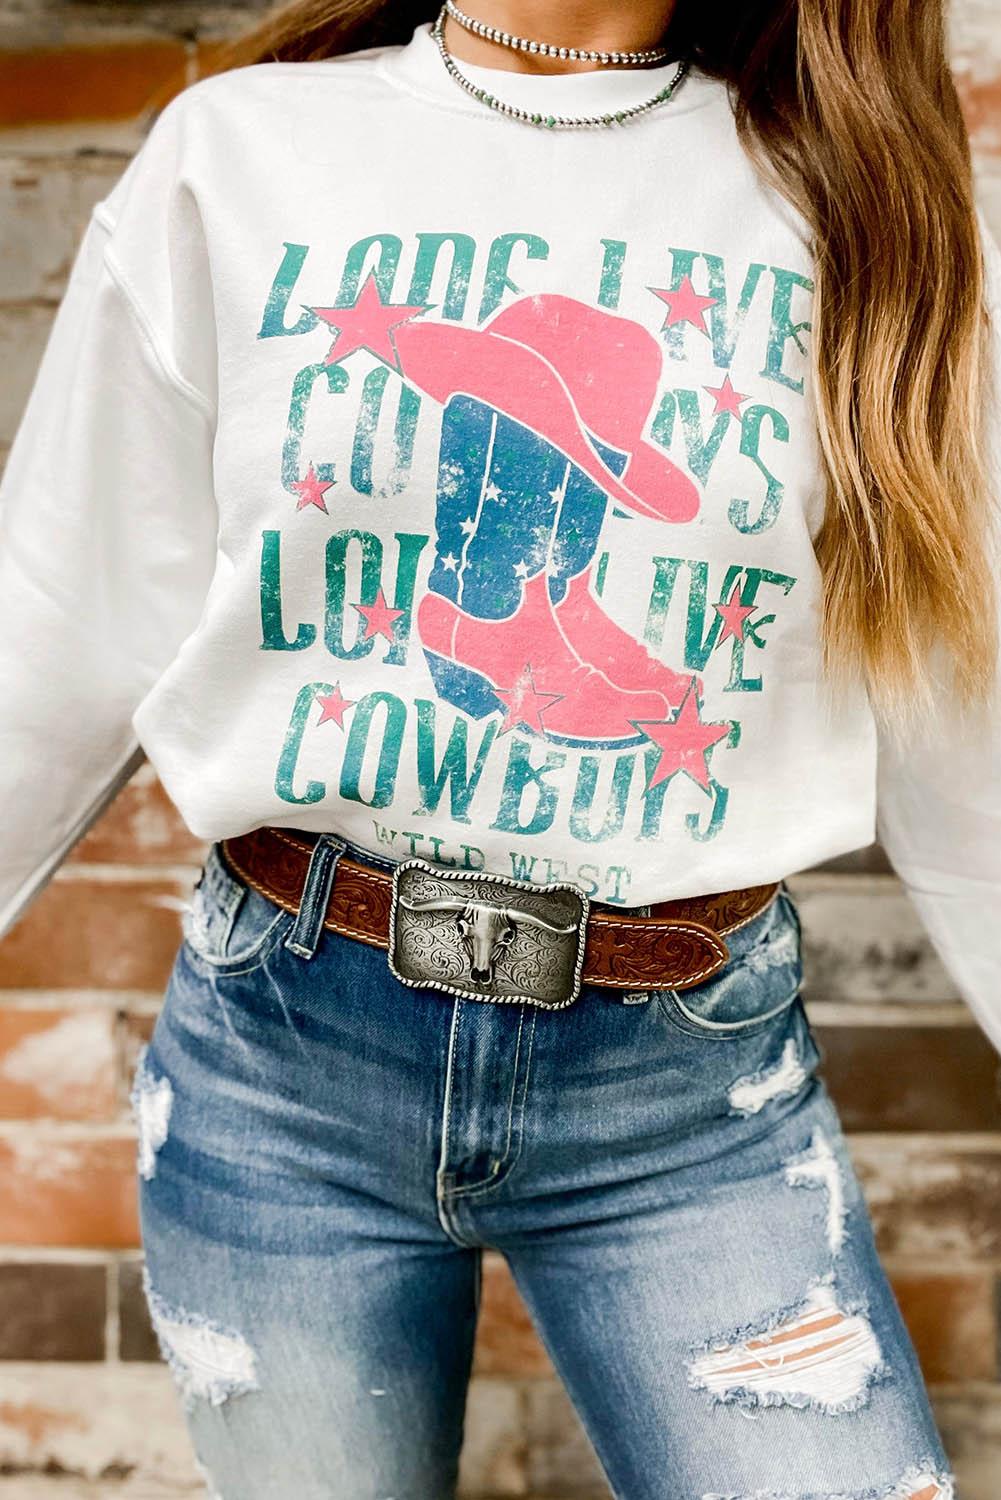 LONG LIVE COWBOY WILD WEST Graphic Sweatshirt - L & M Kee, LLC